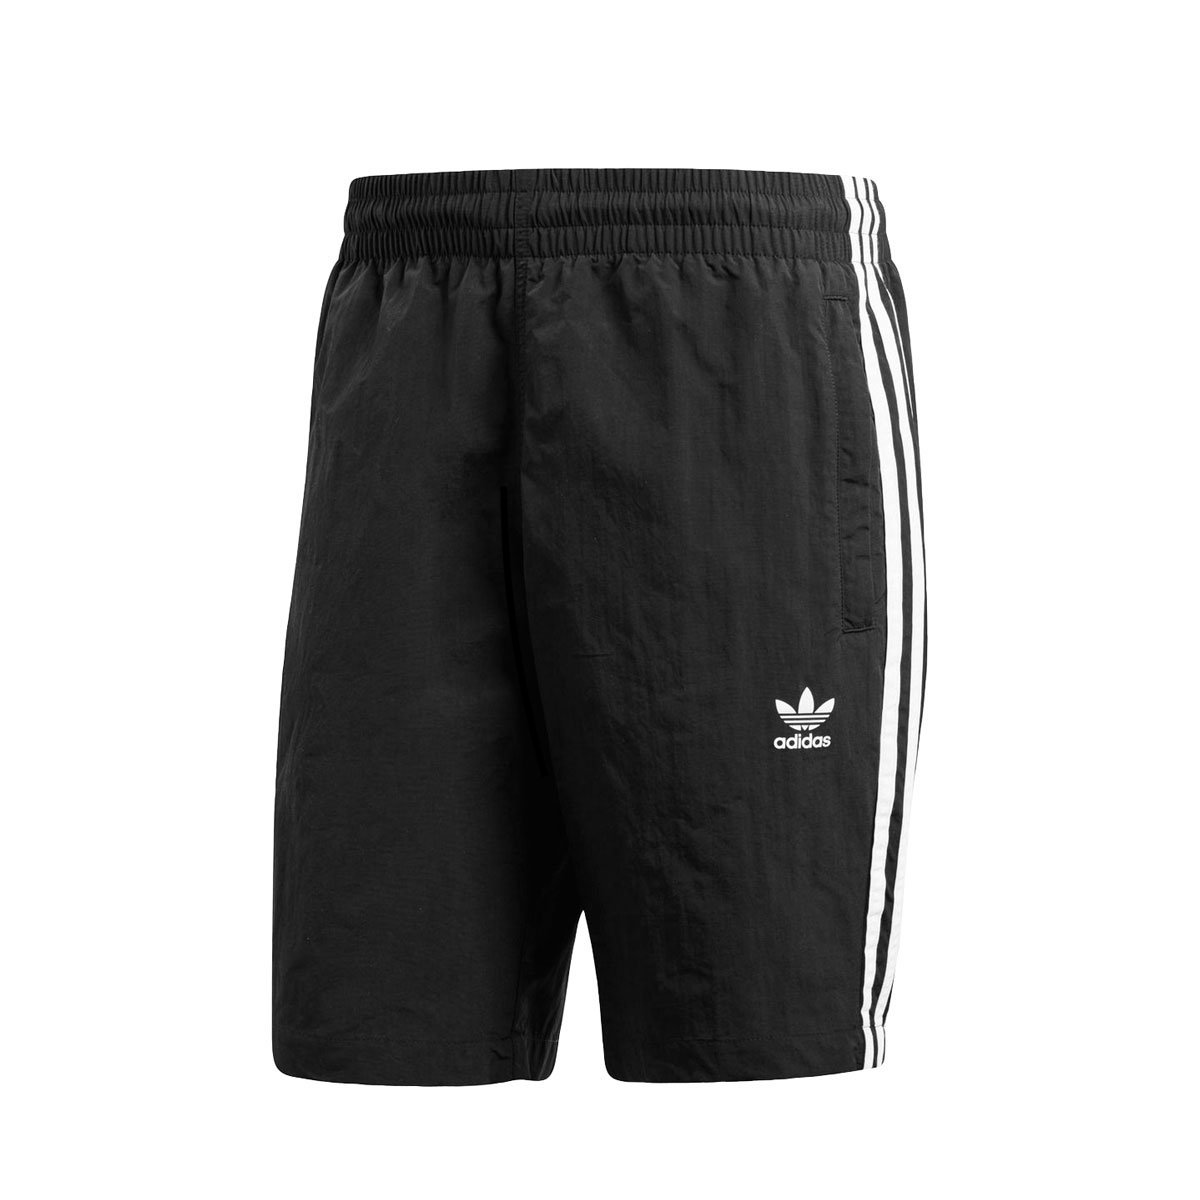 Adidas 3 Stripes Swim Black CW1305 | Bruut Online shop - Bruut Sneakers \u0026  Clothing Store